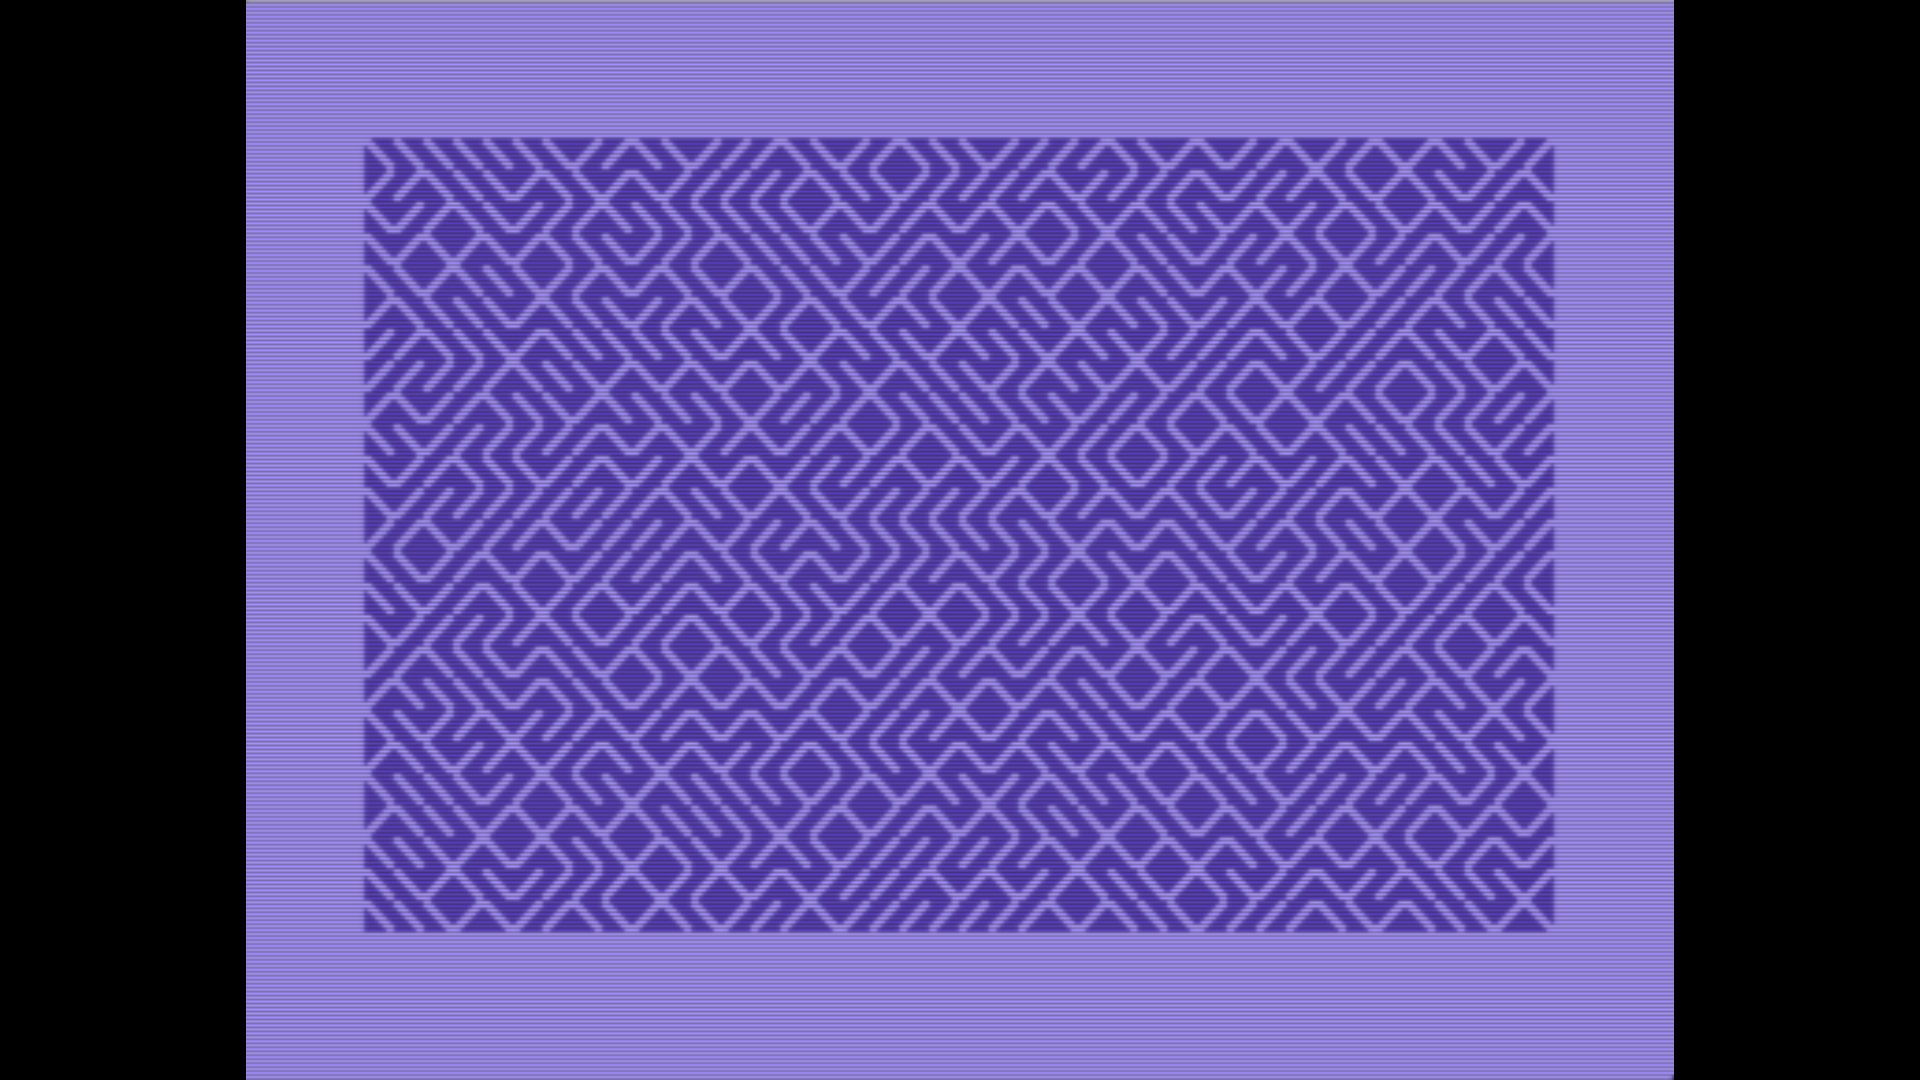 screenshot of a Commodore 64 screen showing a random maze